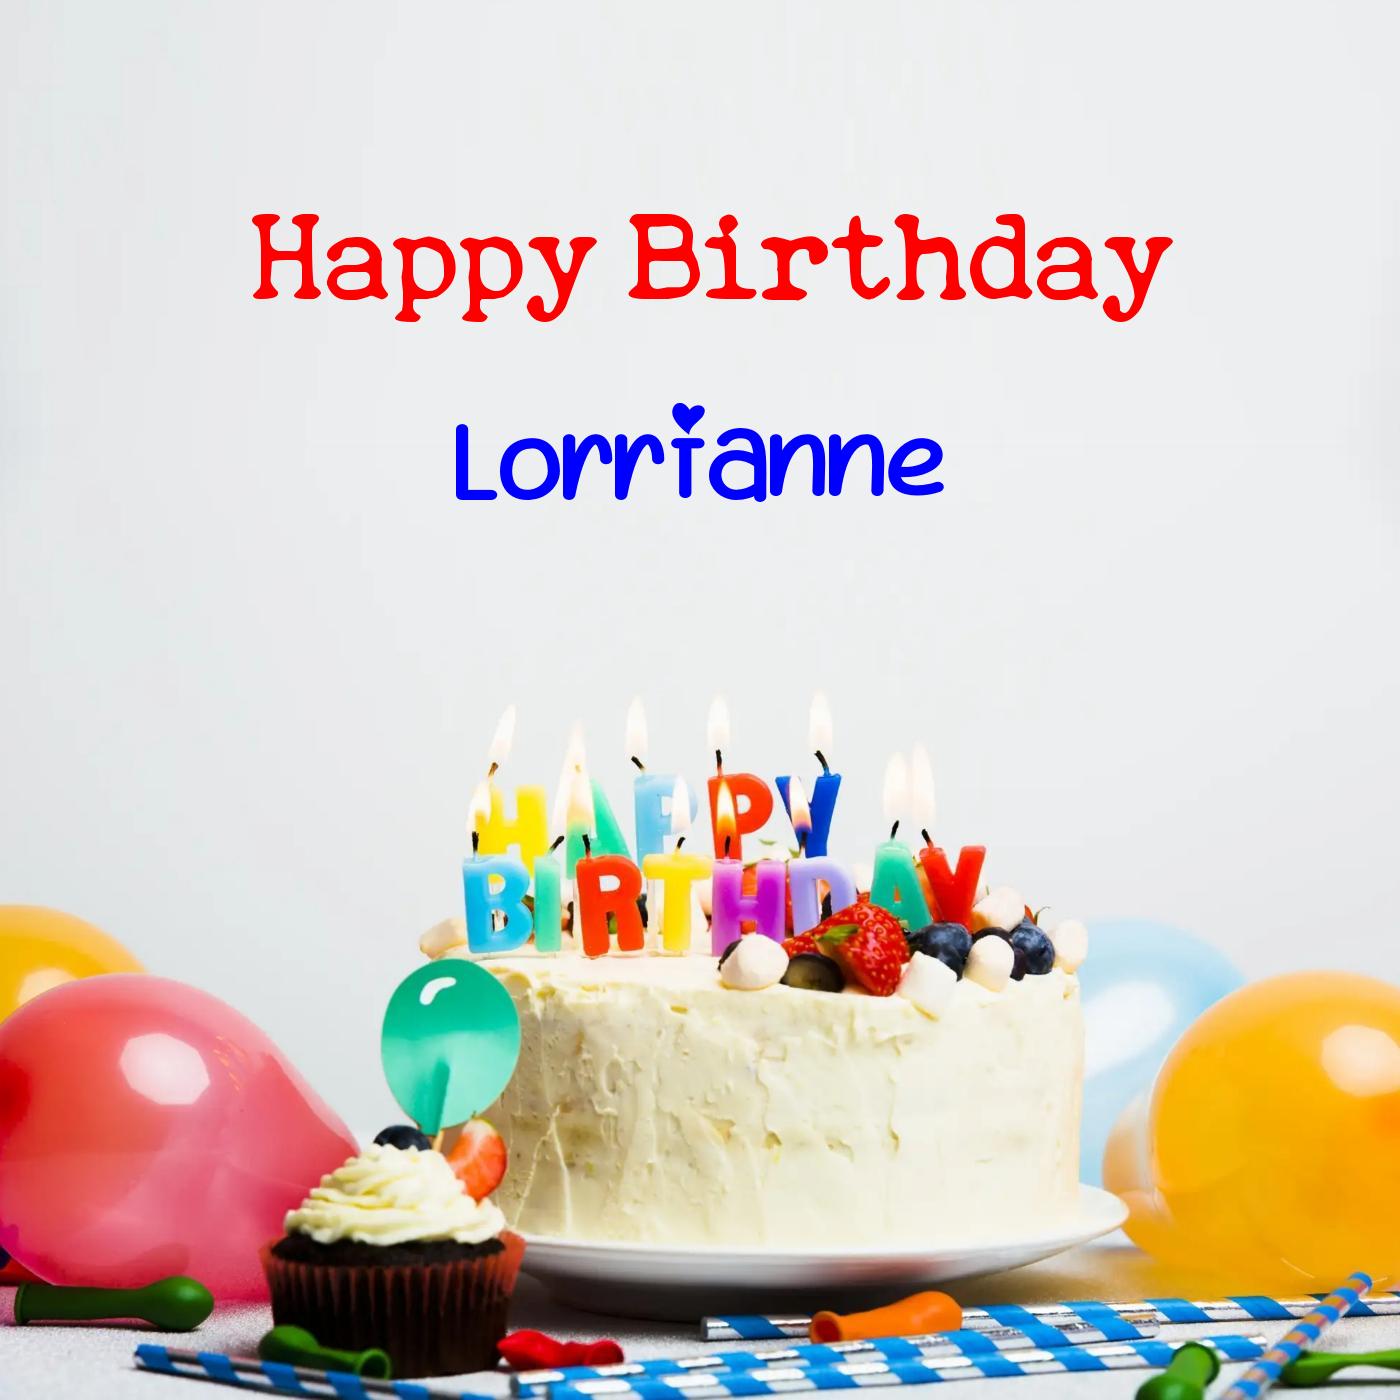 Happy Birthday Lorrianne Cake Balloons Card